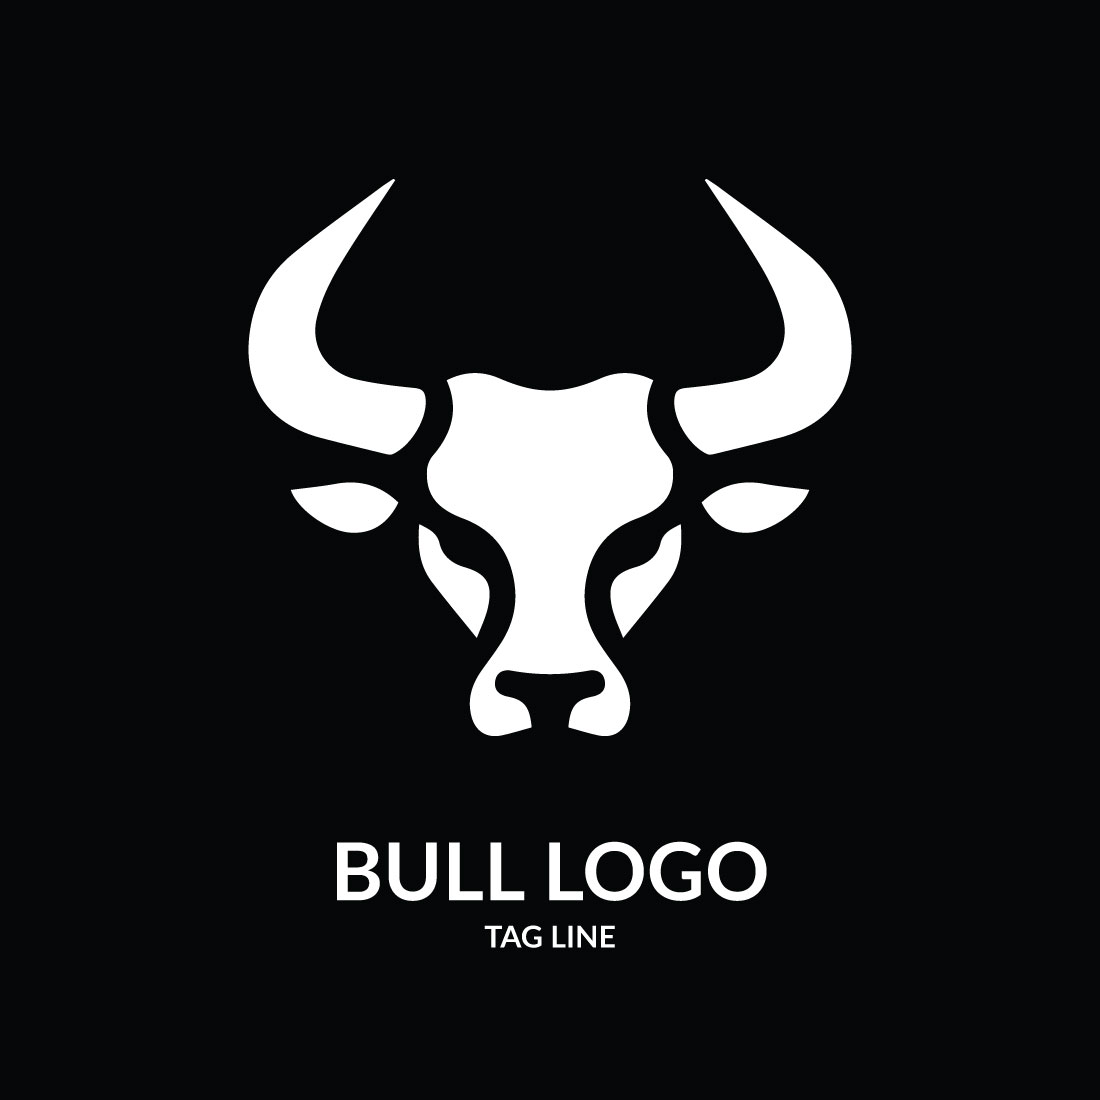 Bull Head Logo Template cover image.